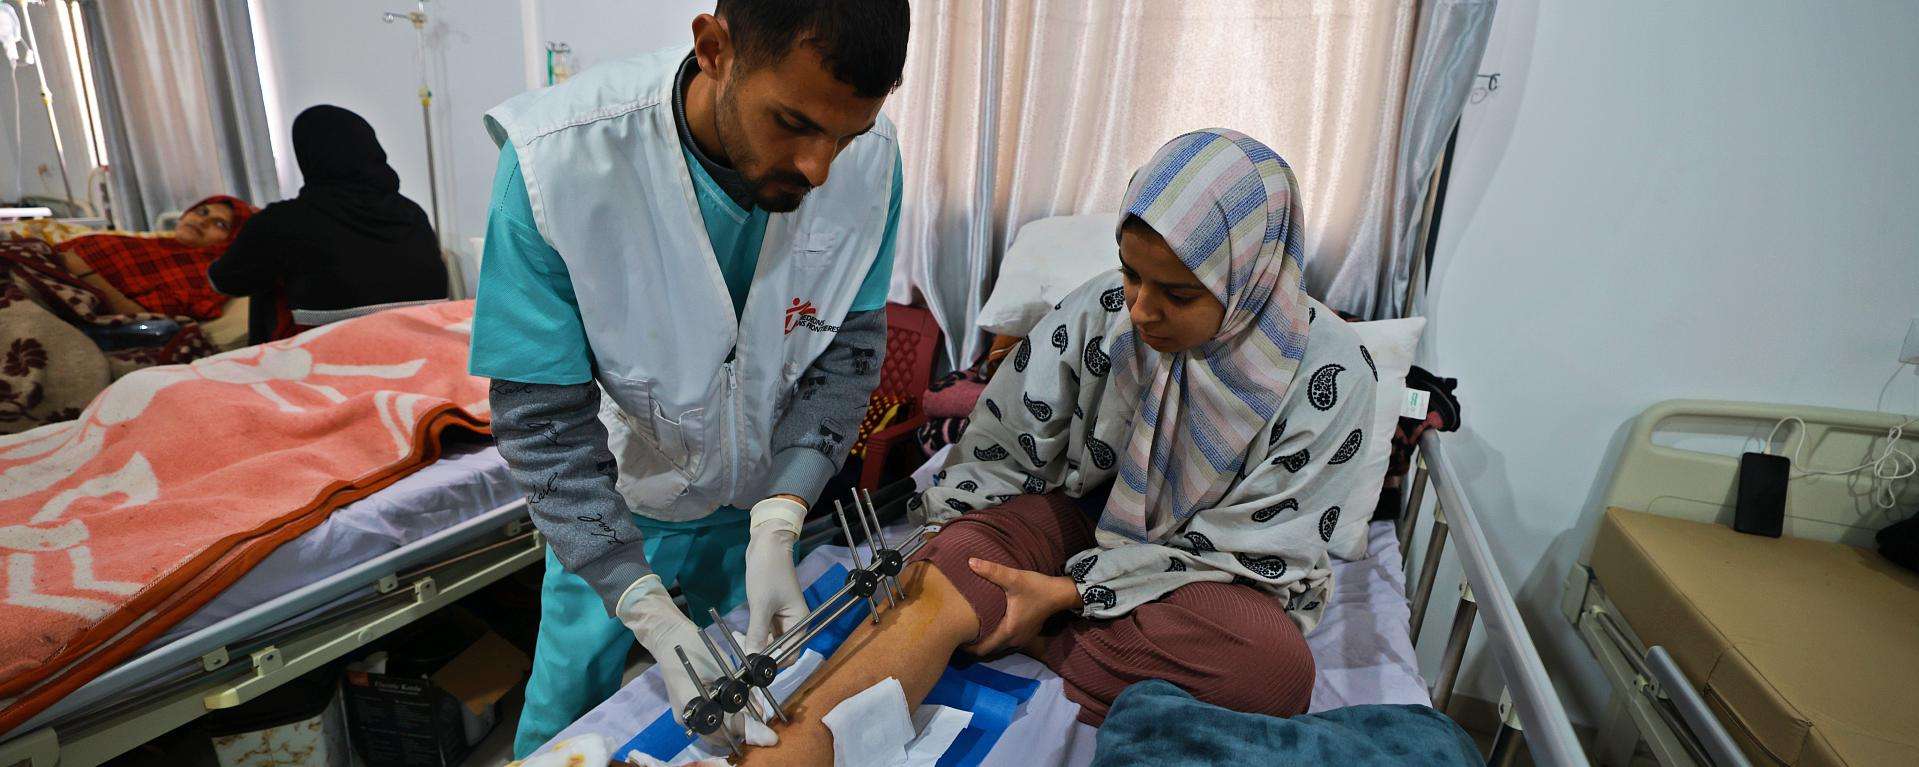 An MSF staff member treats the injured leg of a woman at Rafah Indonesian Field Hospital in Gaza.